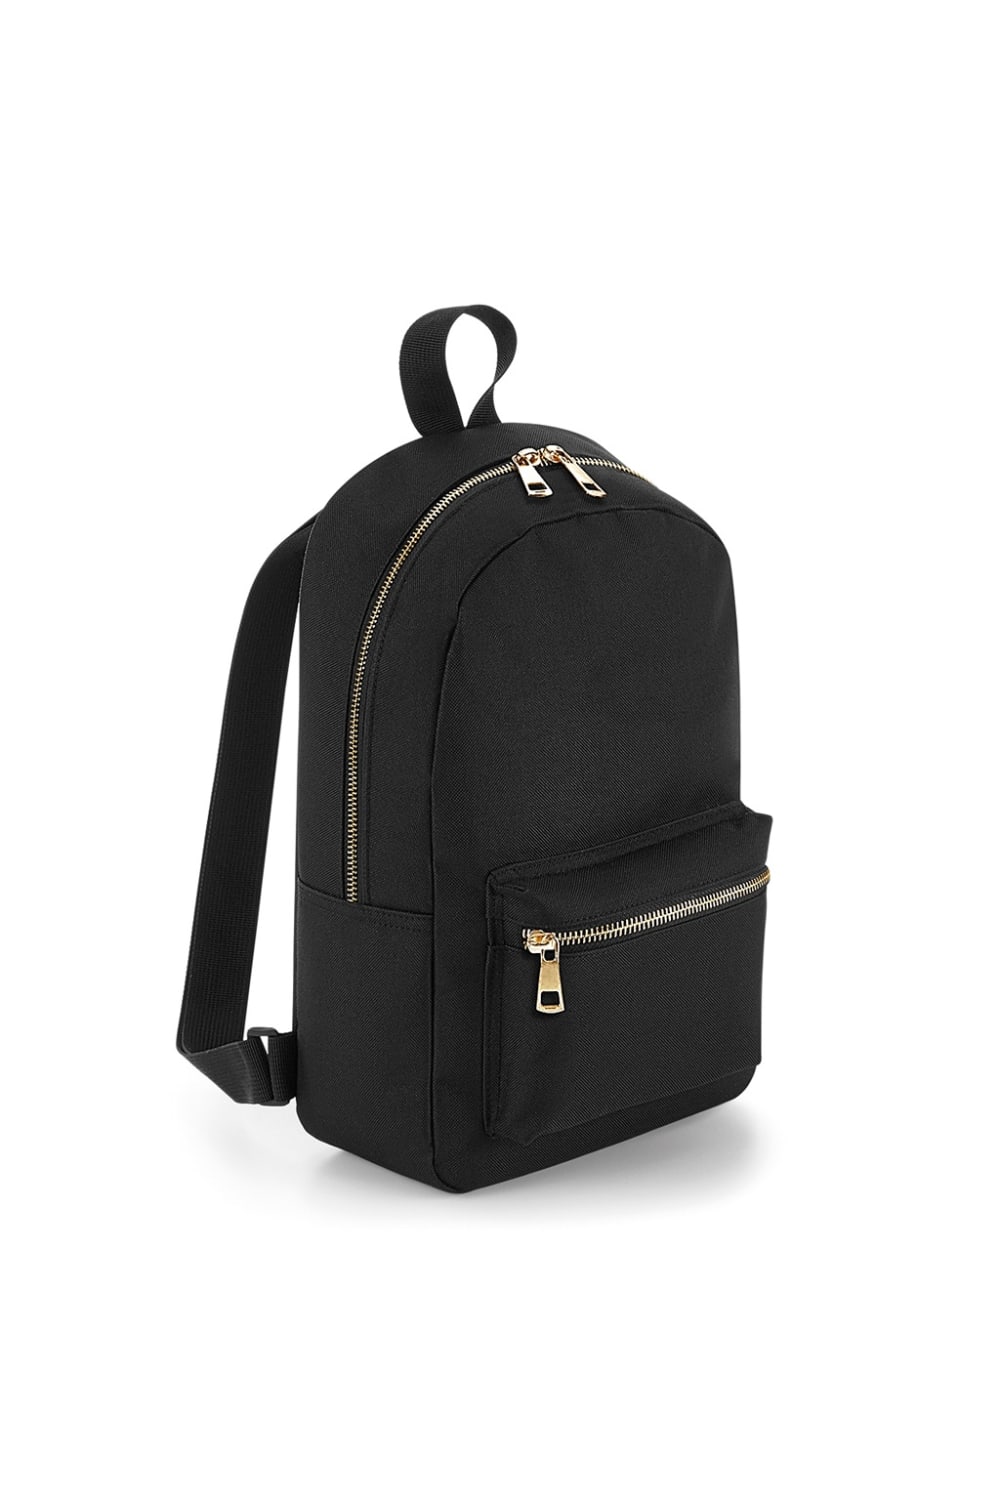 Metallic Zip Mini Backpack - Black/Gold